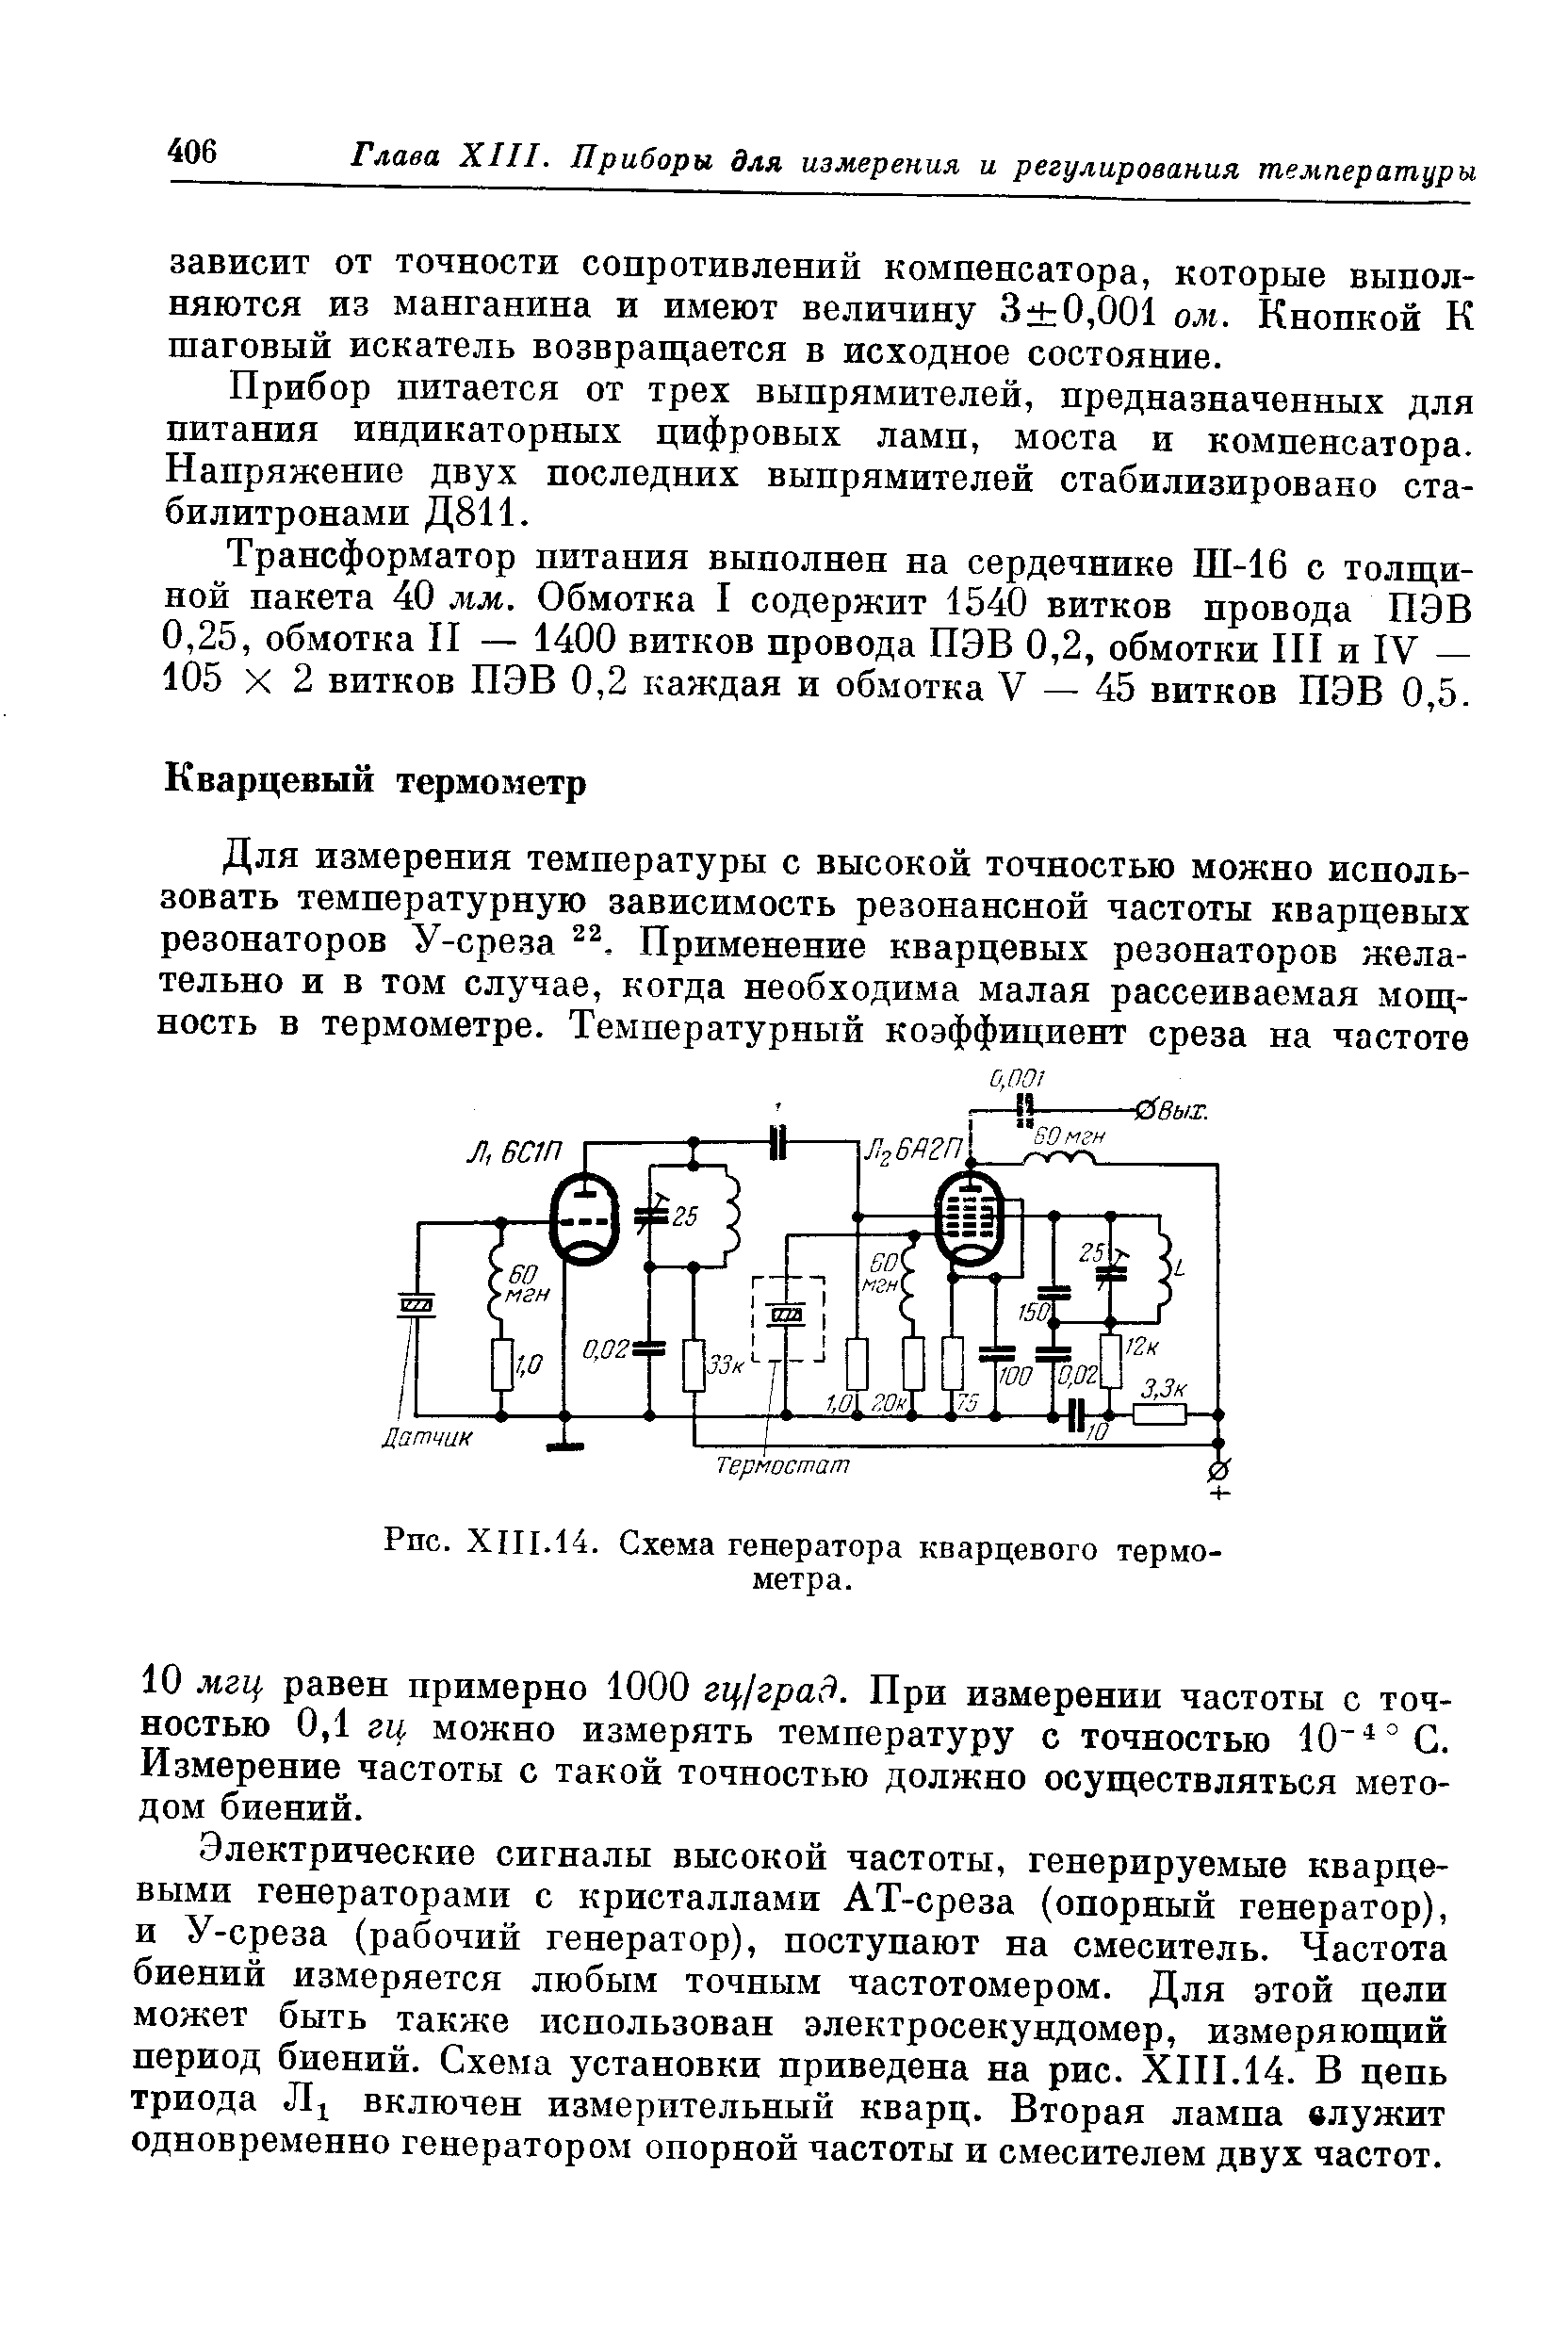 Схема генератора кварцевого термометра.